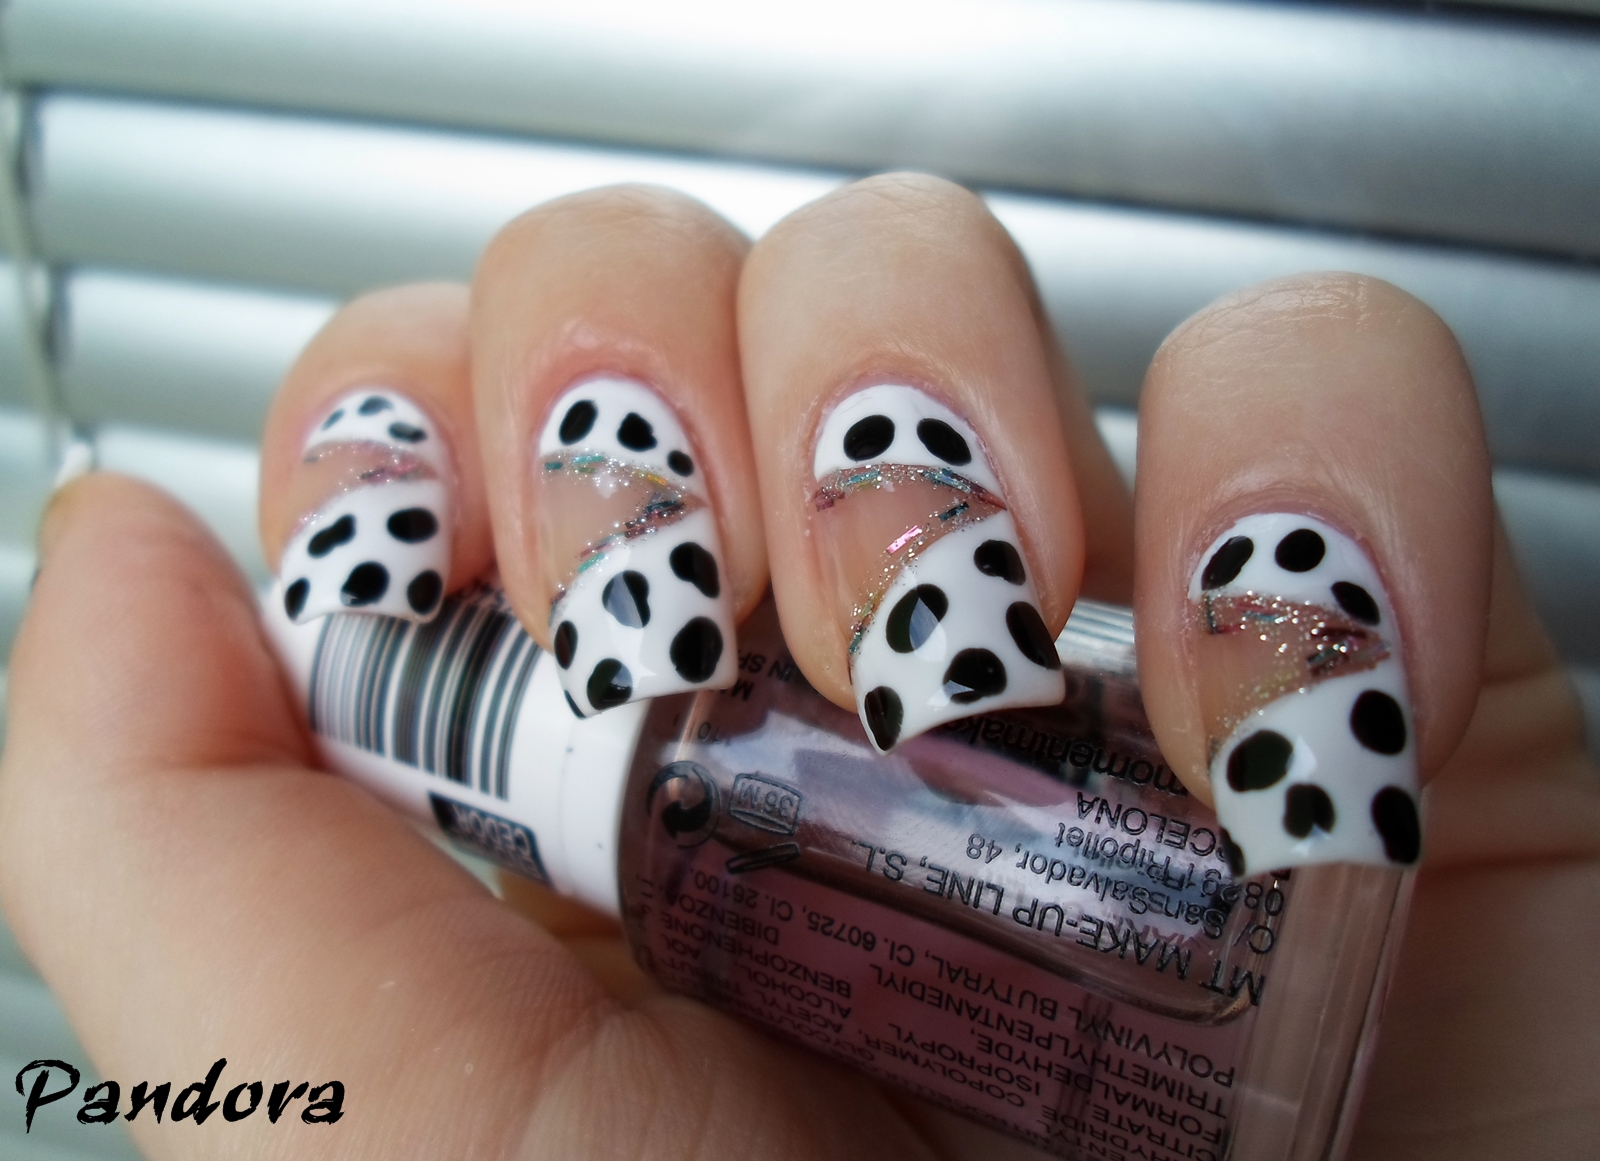 Pandora nails: Black & white